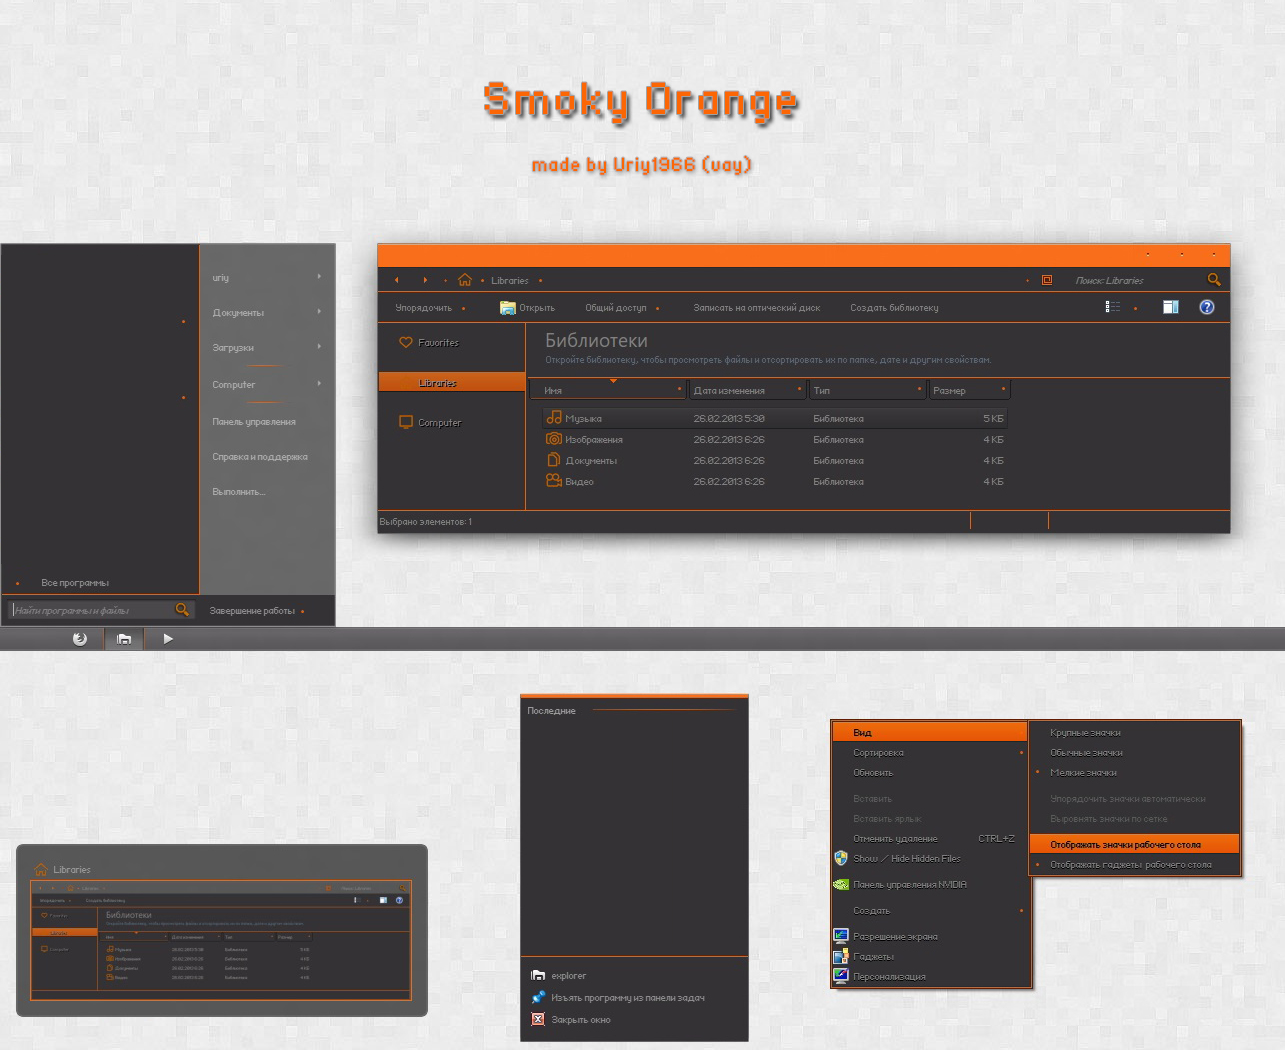 Smoky Orange